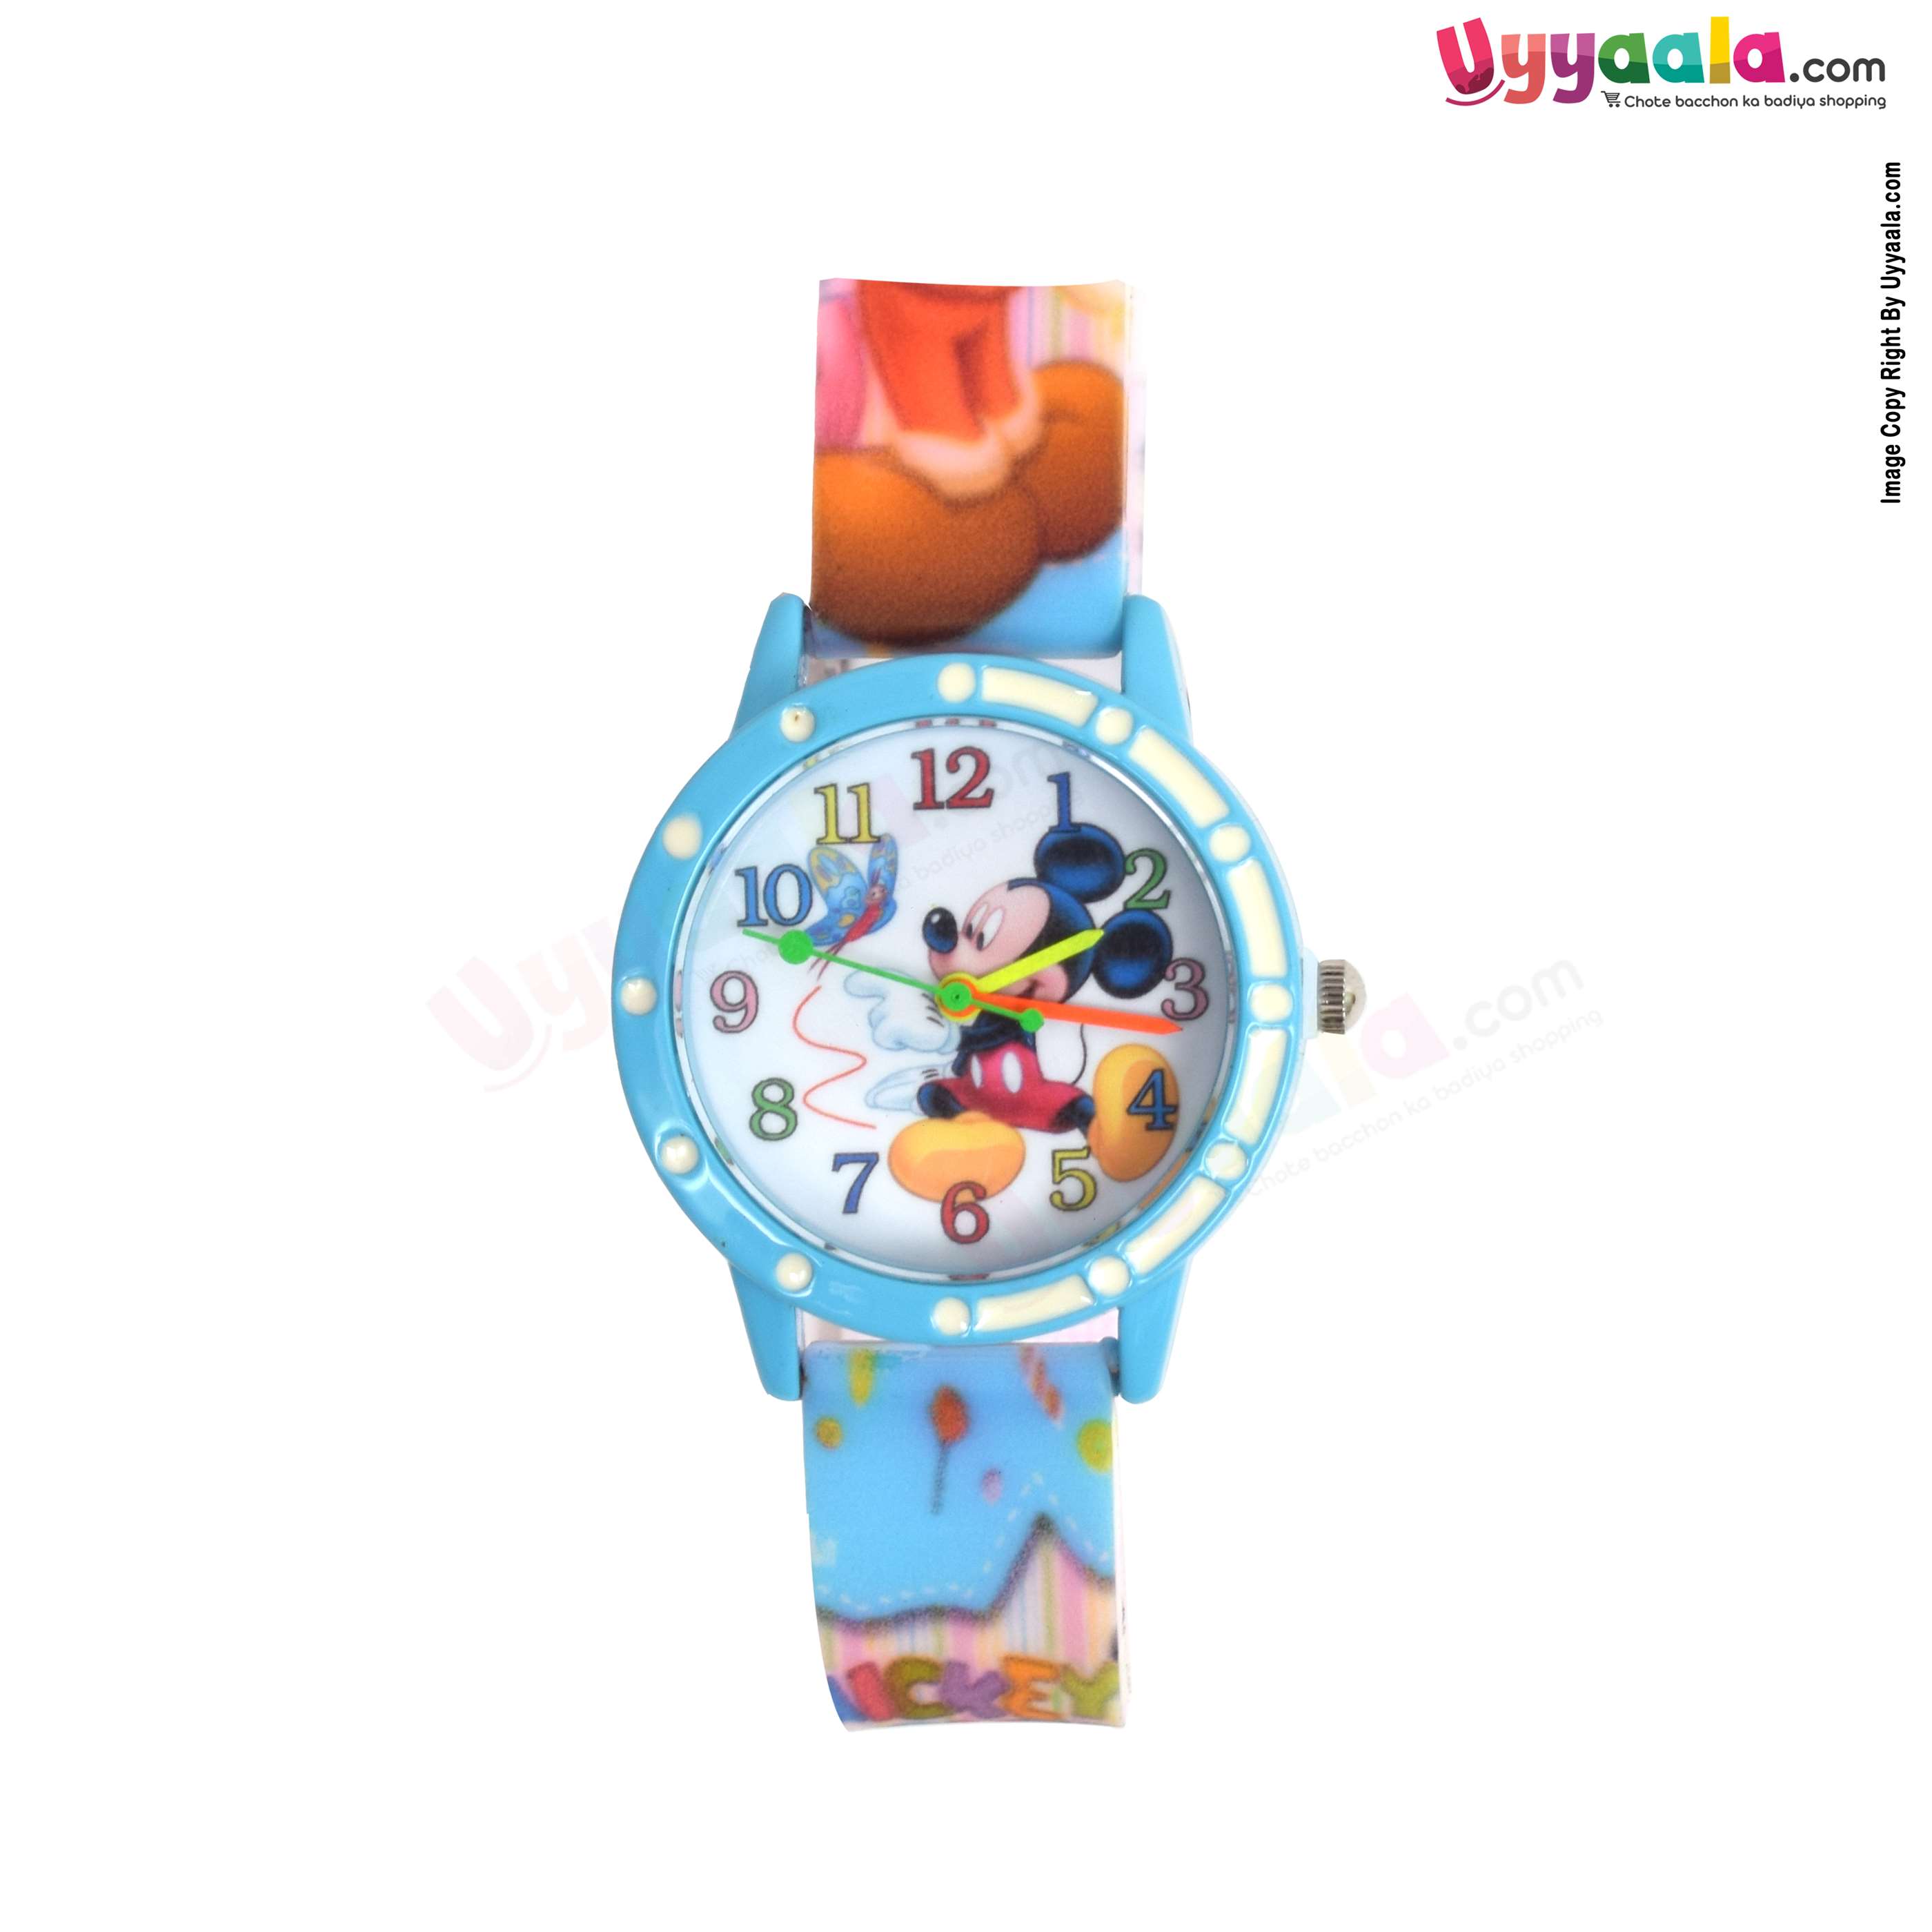 Mickey analog watch for kids